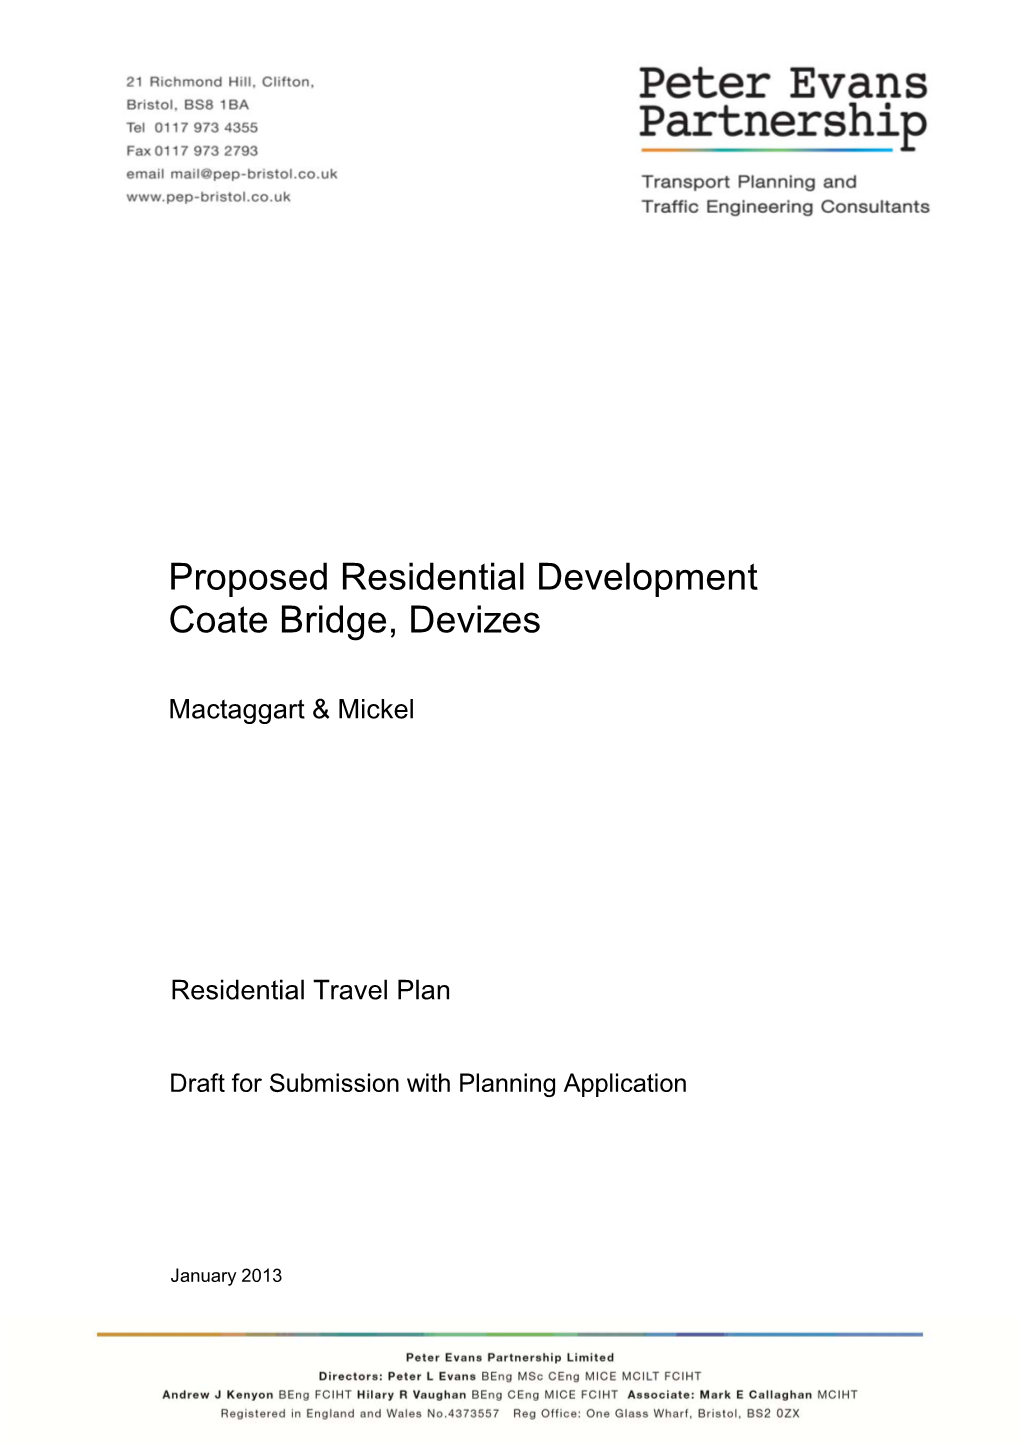 Proposed Residential Development Coate Bridge, Devizes